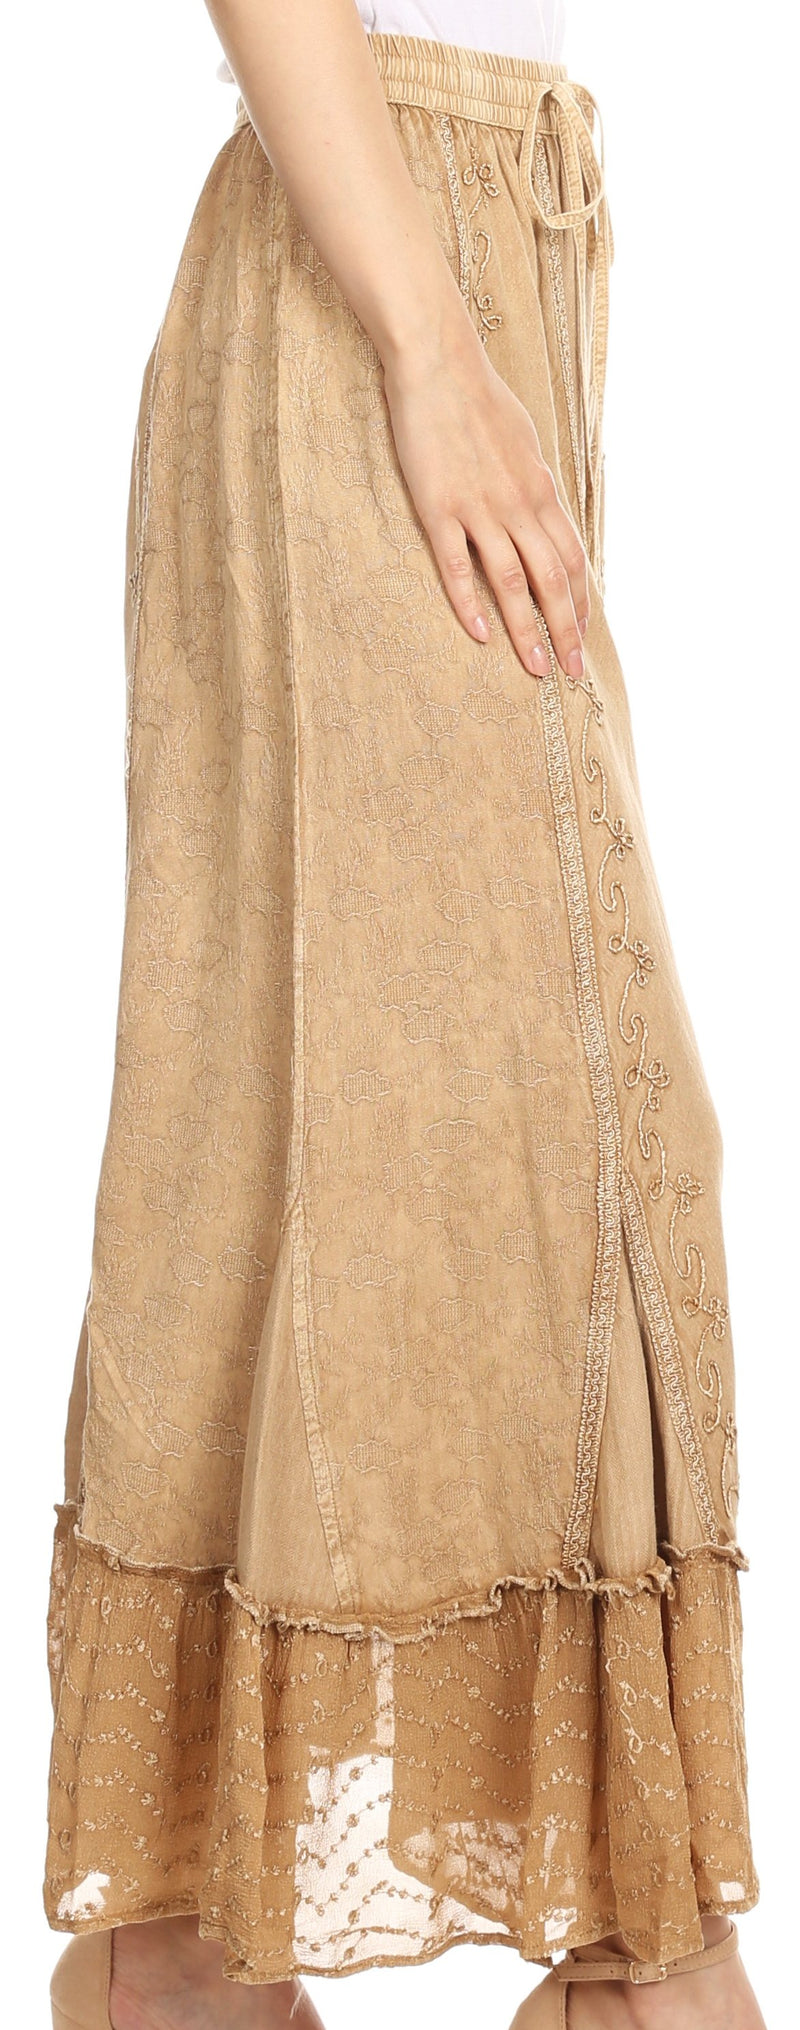 Sakkas Monica Womens Gypsy Bohemian Long Maxi Skirt with Elastic Waist and Lace